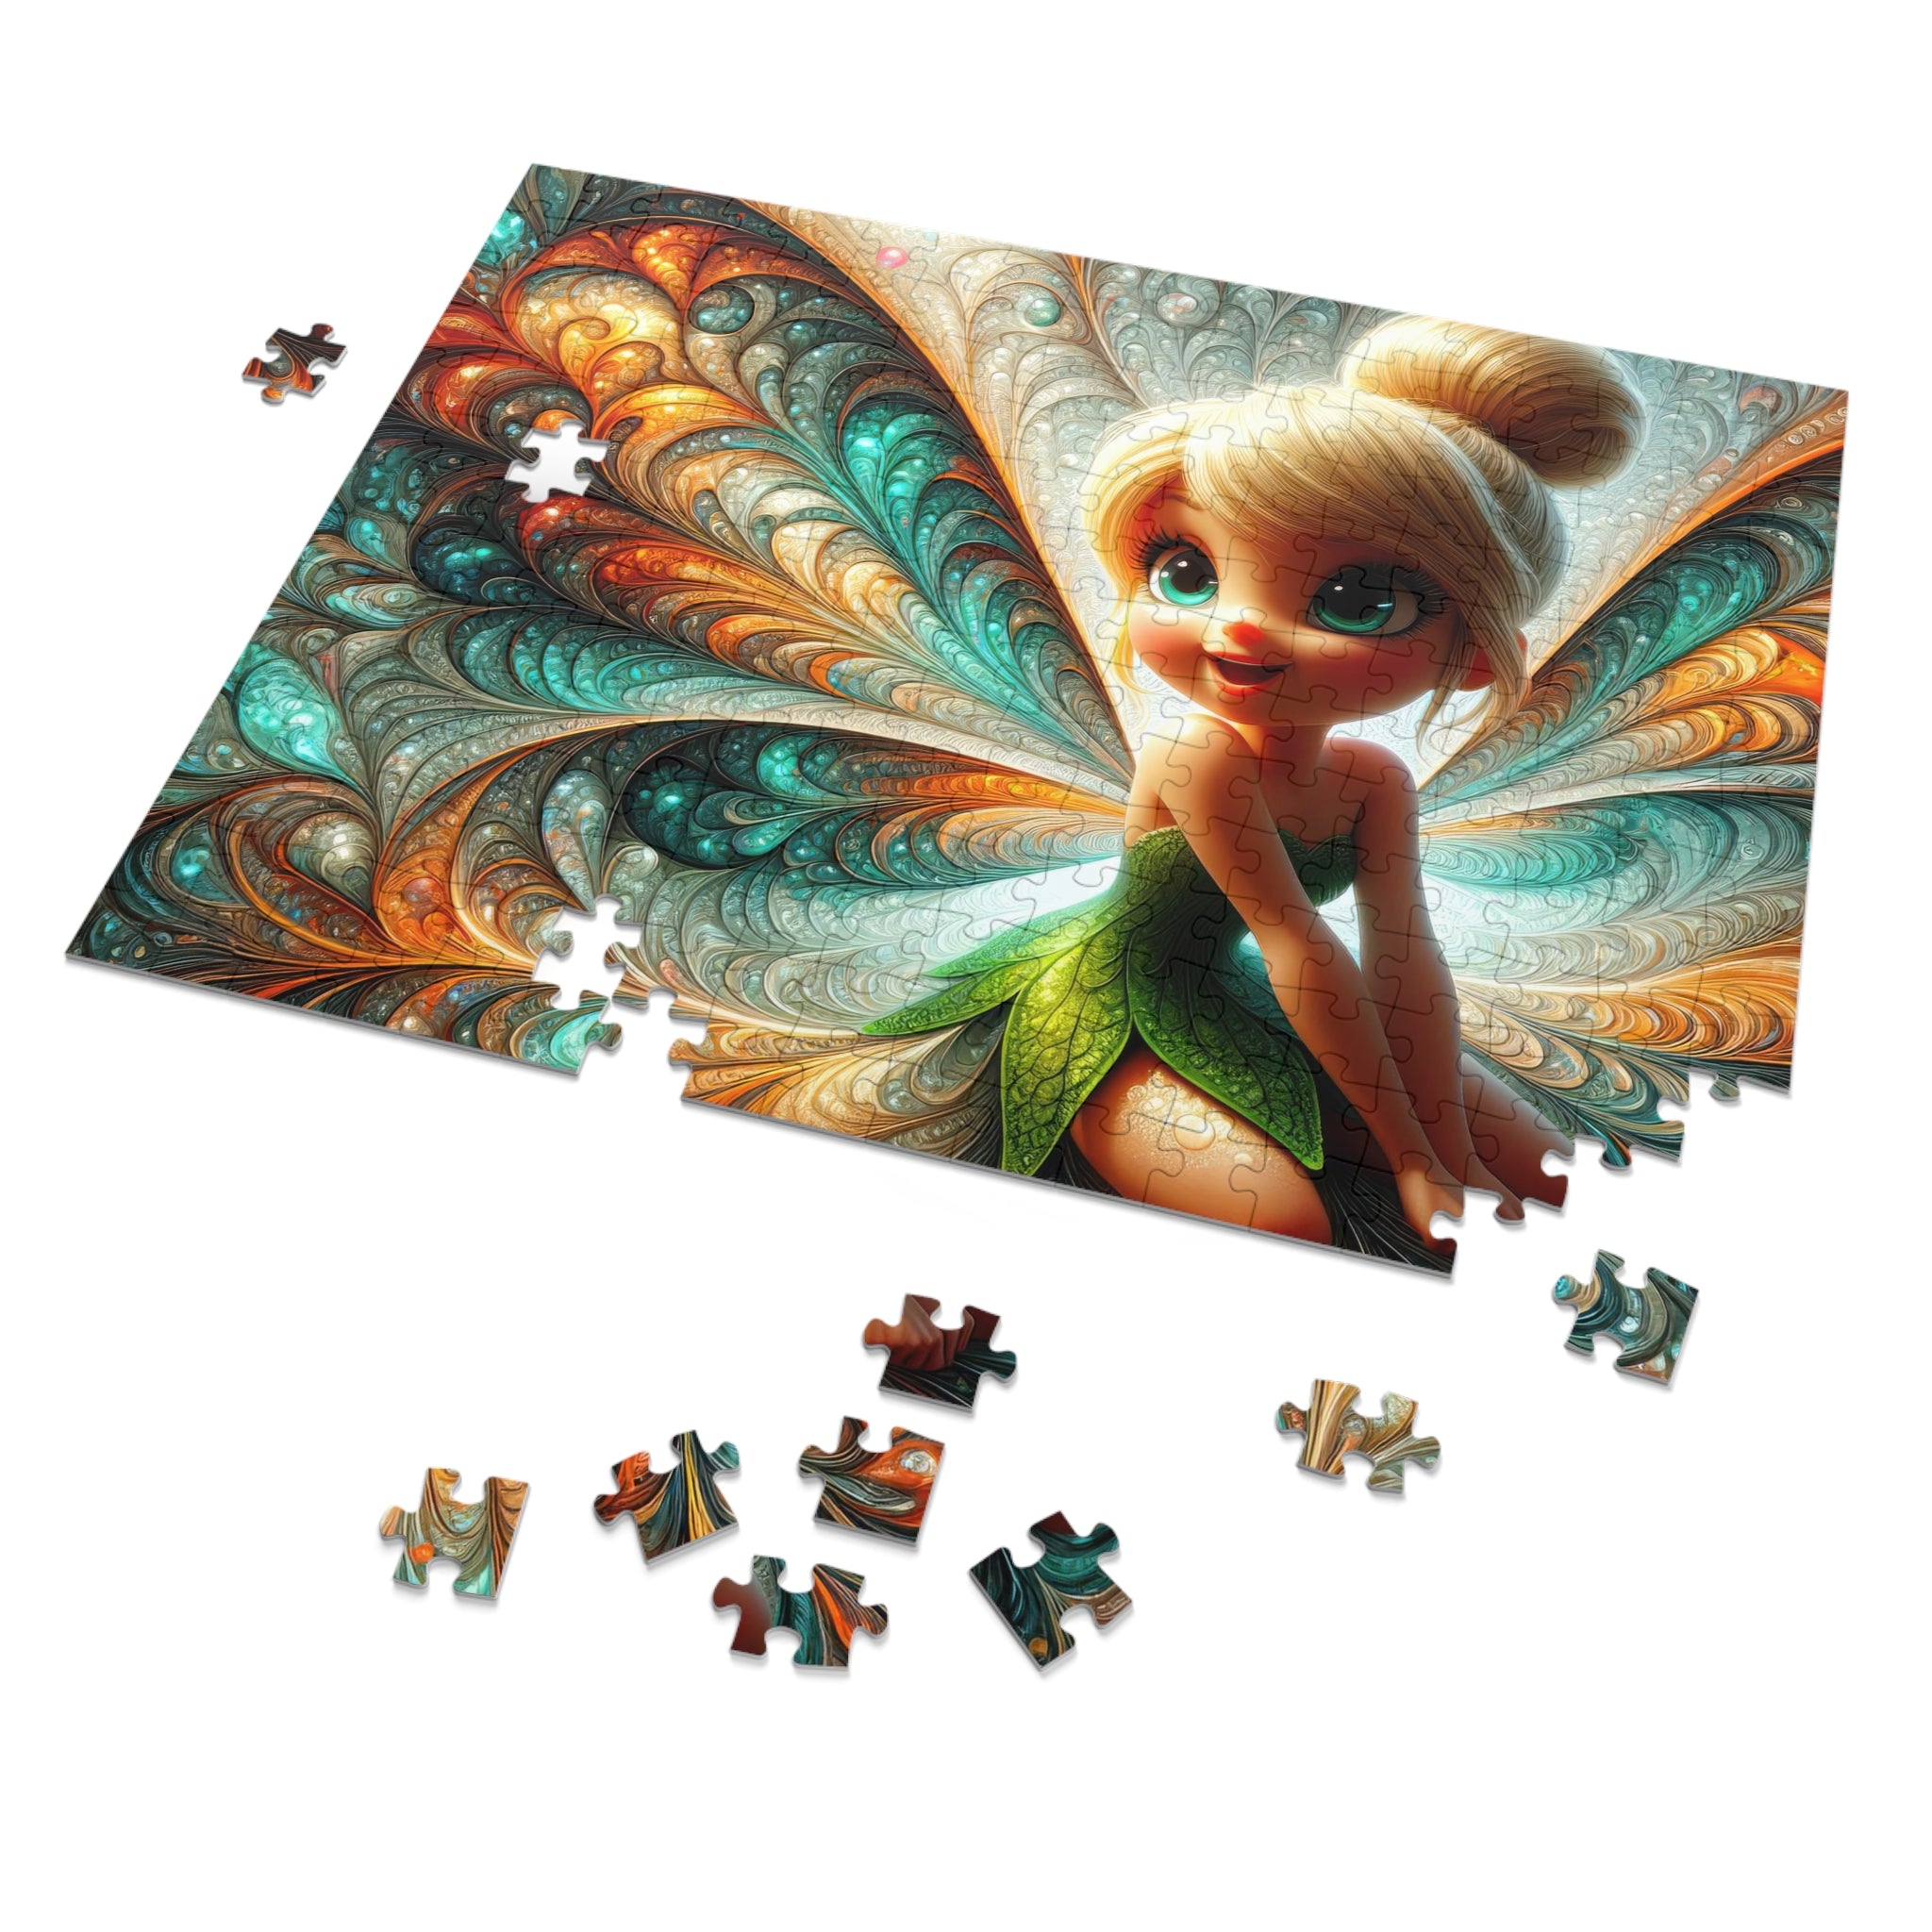 The Pixie's Palette Jigsaw Puzzle